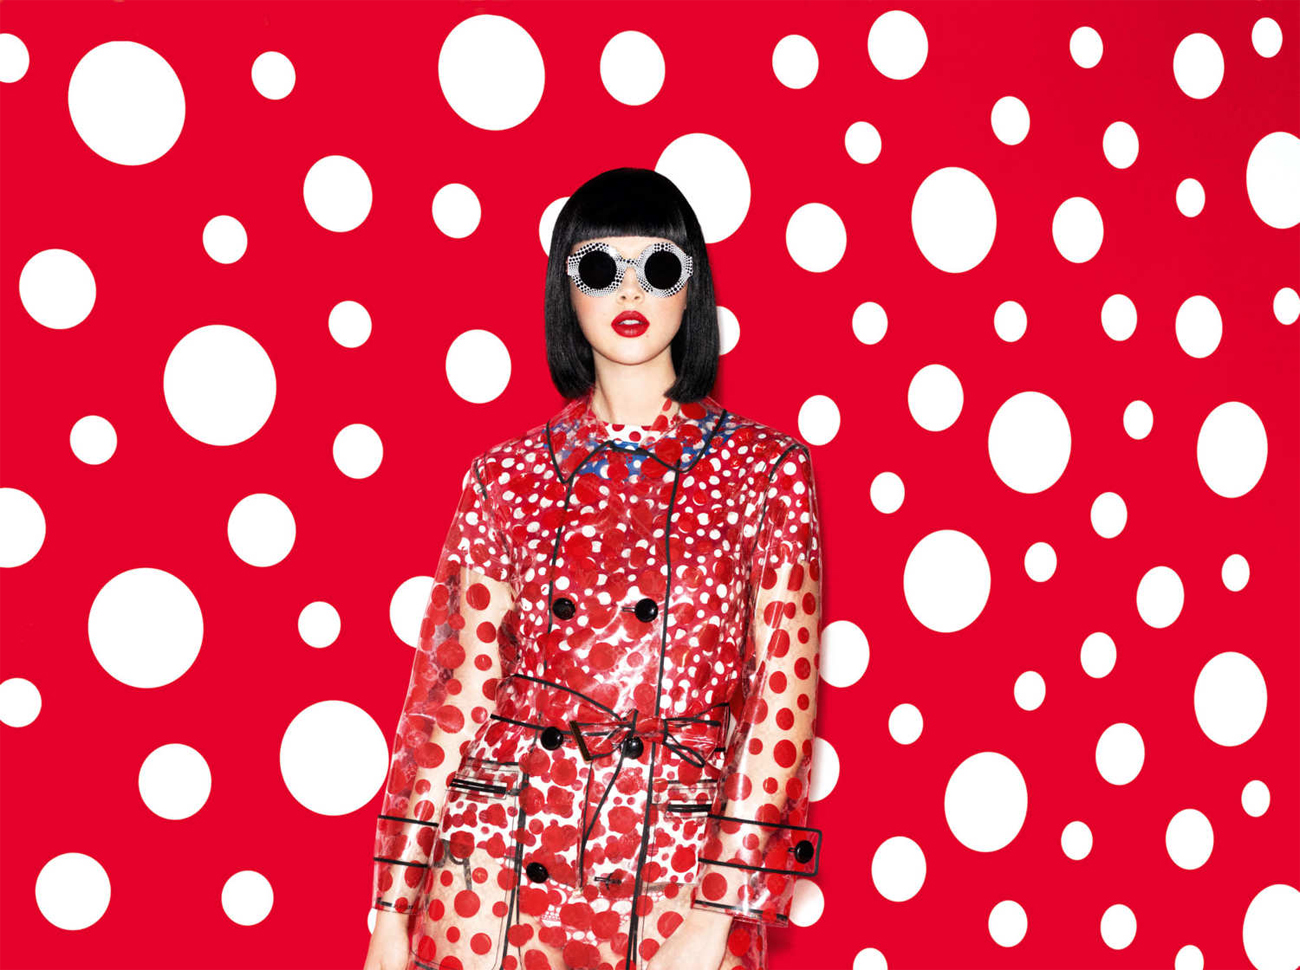 Marc Jacobs, Yayoi Kusama collaborate on dotted fashion line